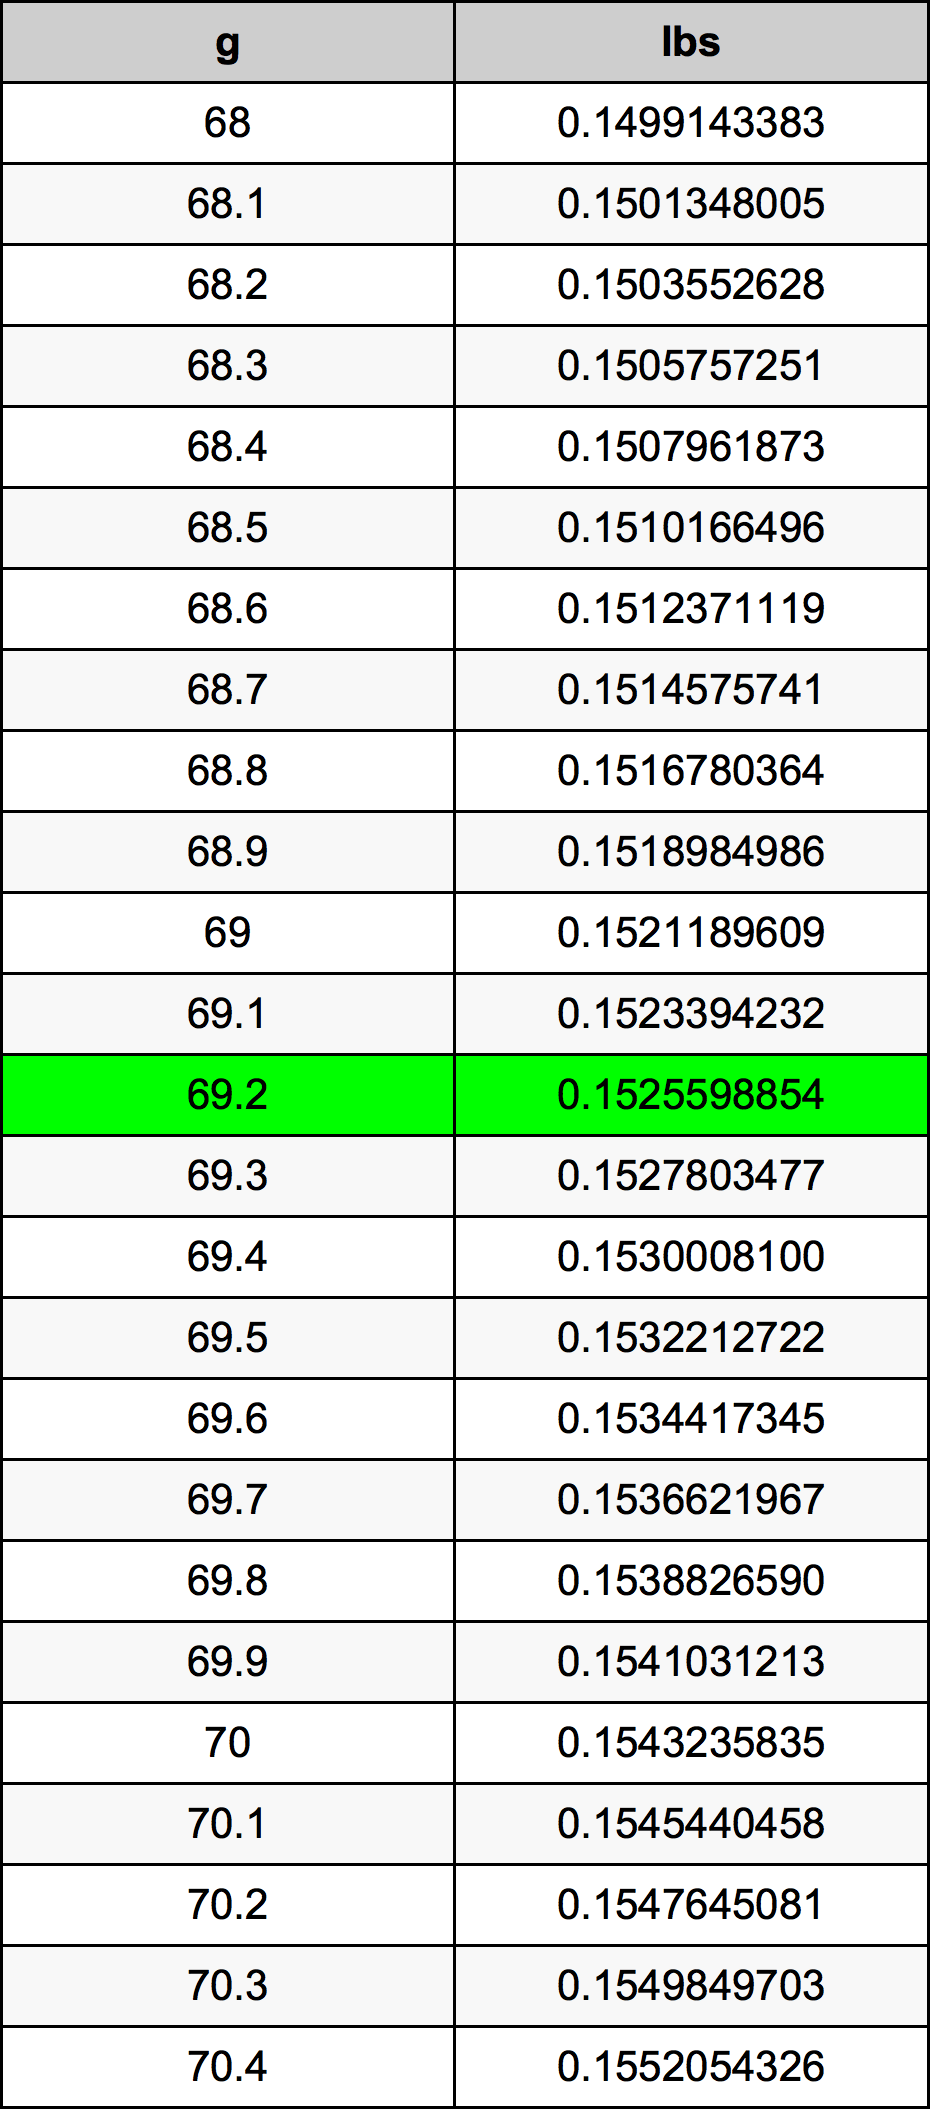 69.2 غرام جدول تحويل